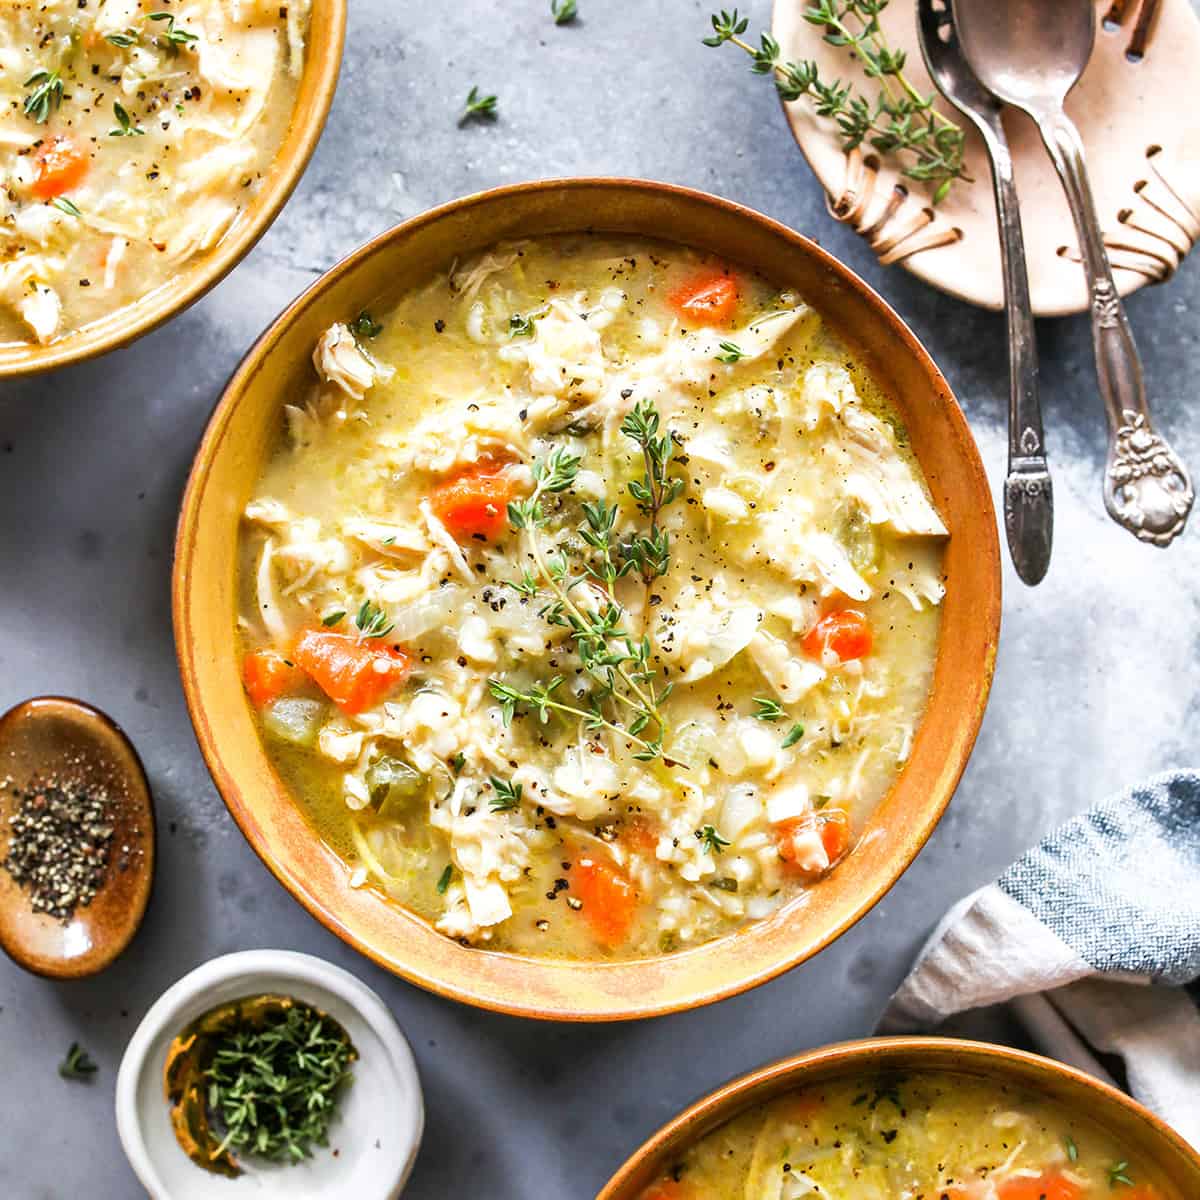 https://joyfoodsunshine.com/wp-content/uploads/2020/09/chicken-and-rice-soup-recipe-2.jpg